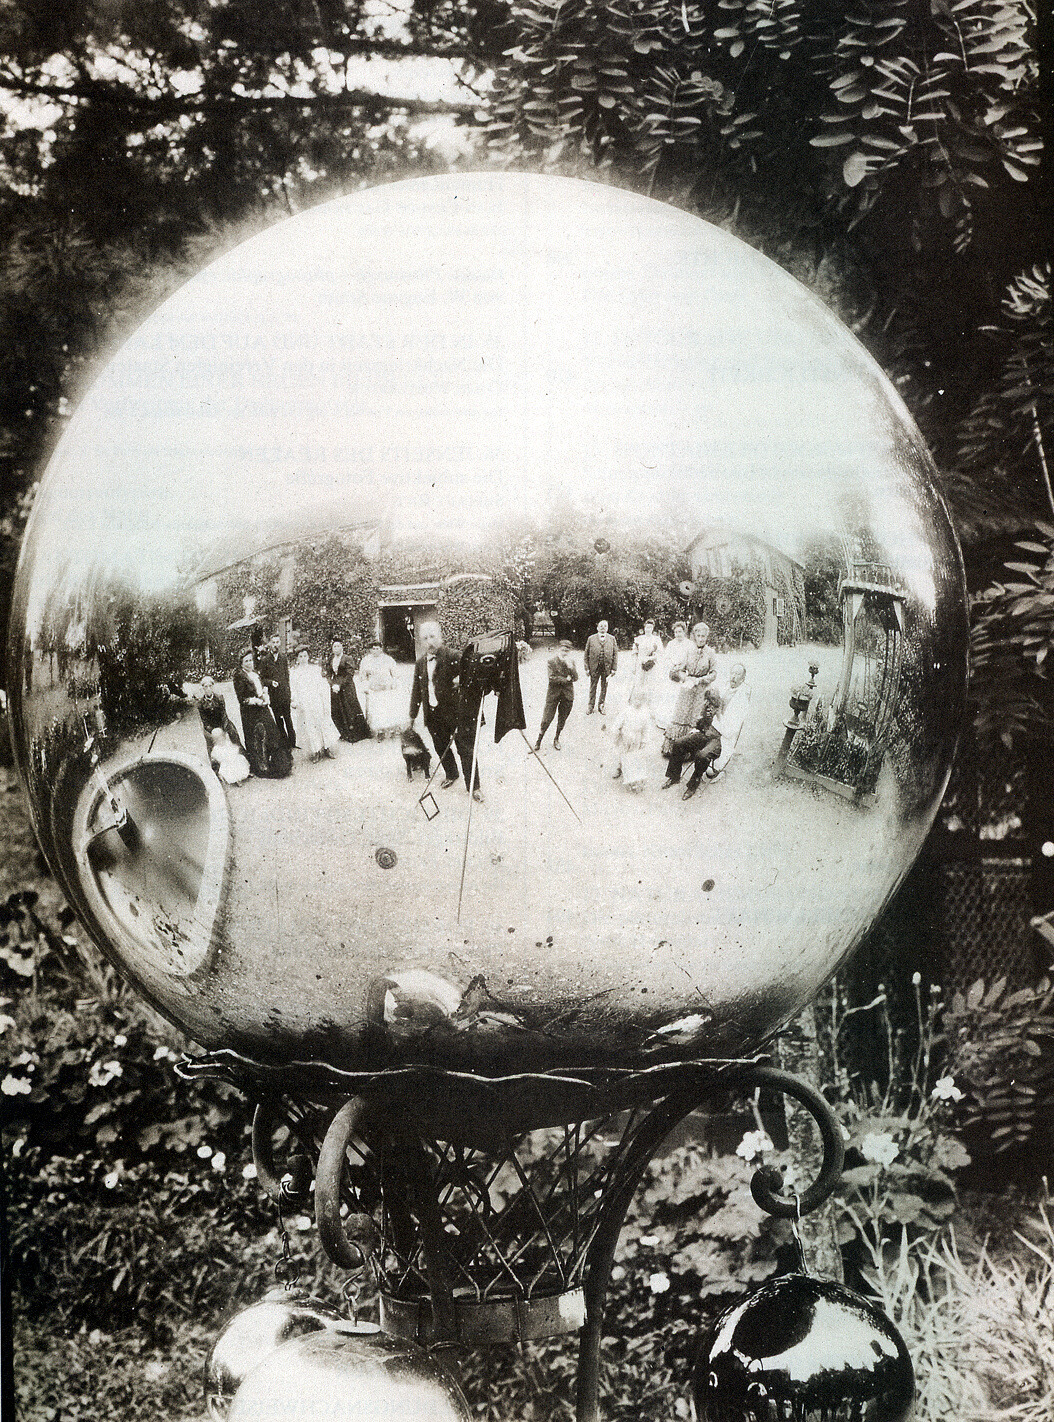 Une famille se prend en photo dans une ornementation de jardin en forme de globe